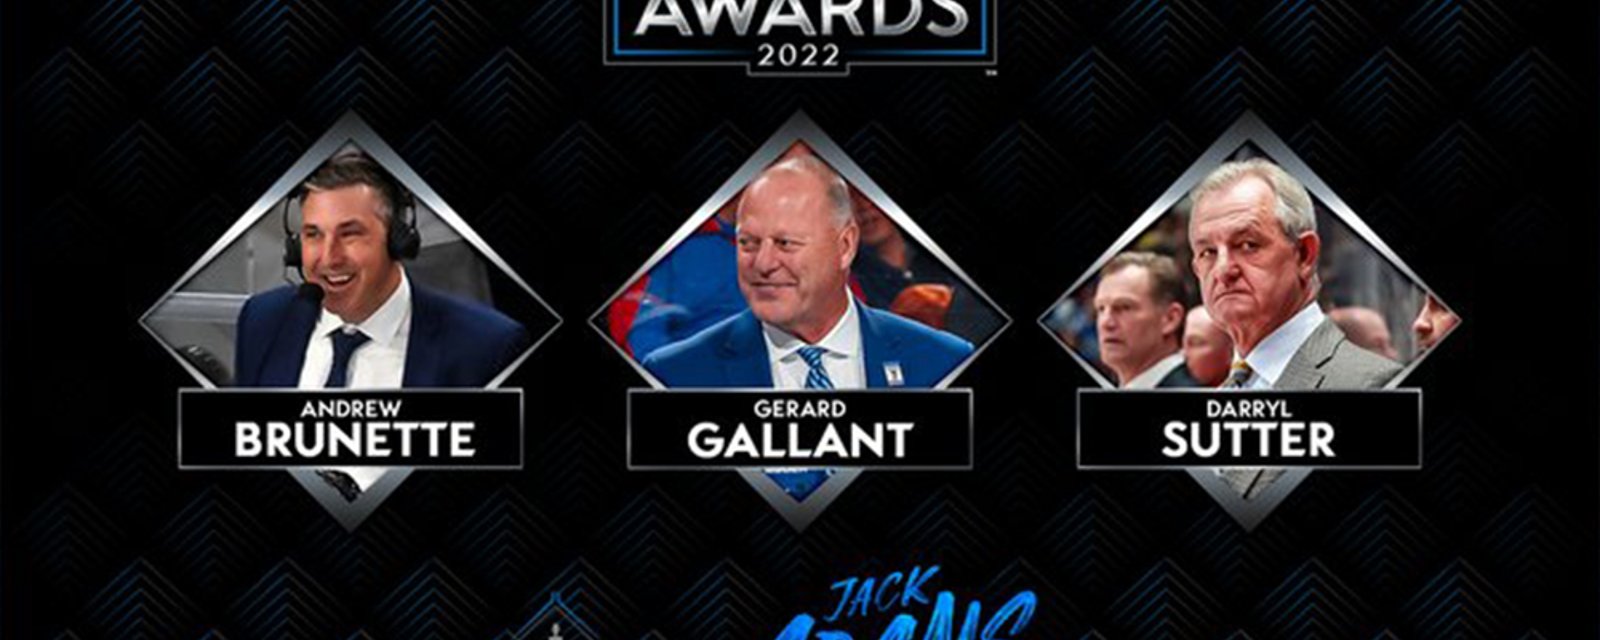 Sutter, Gallant and Brunette get Jack Adams Award nods as NHL's best coach in 2021-22